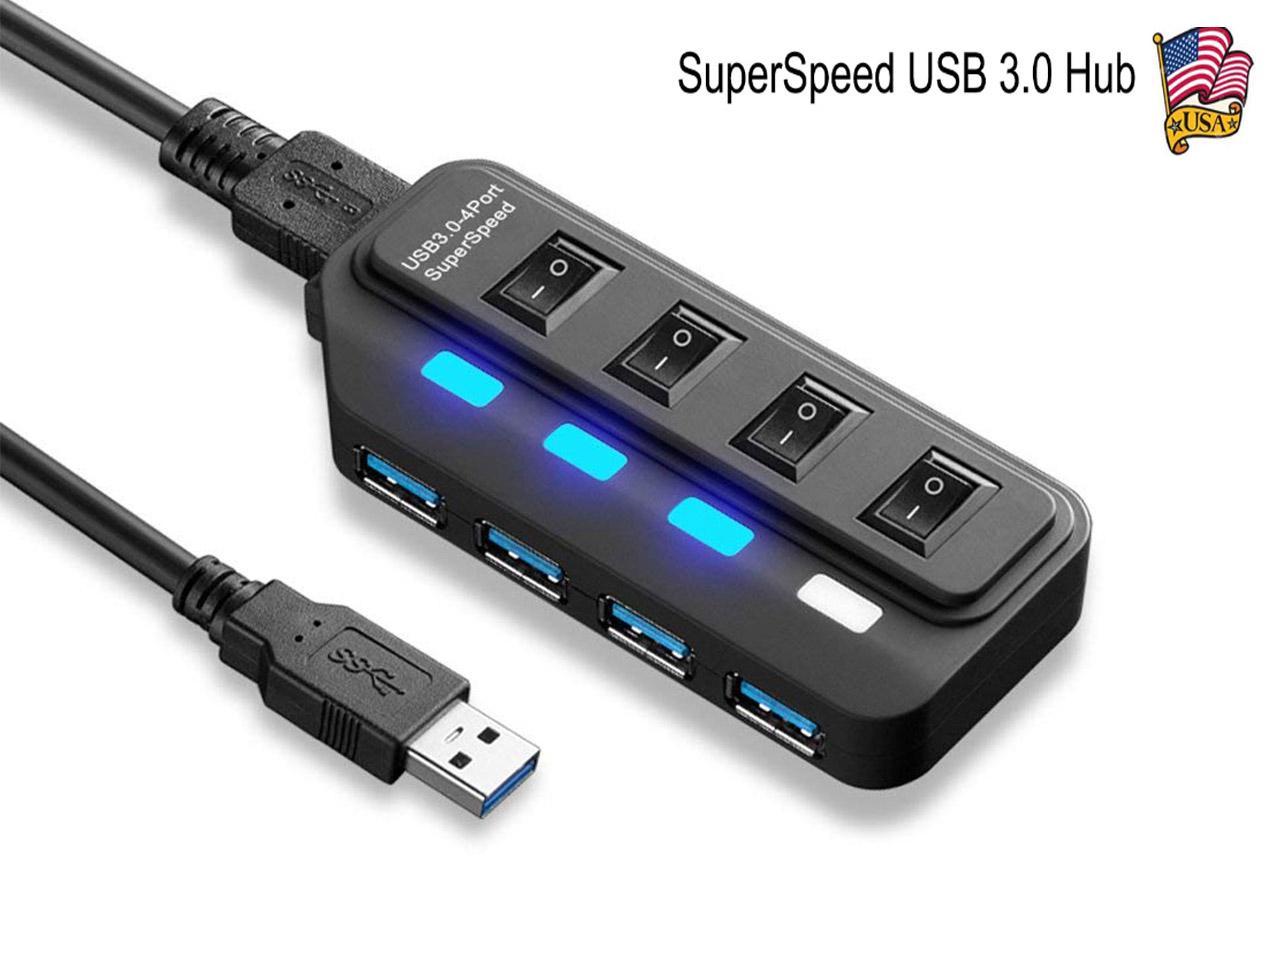 iXCC Aluminum 4 Port Compact Portable High Speed USB 3.0 Data Hub for Windows, 